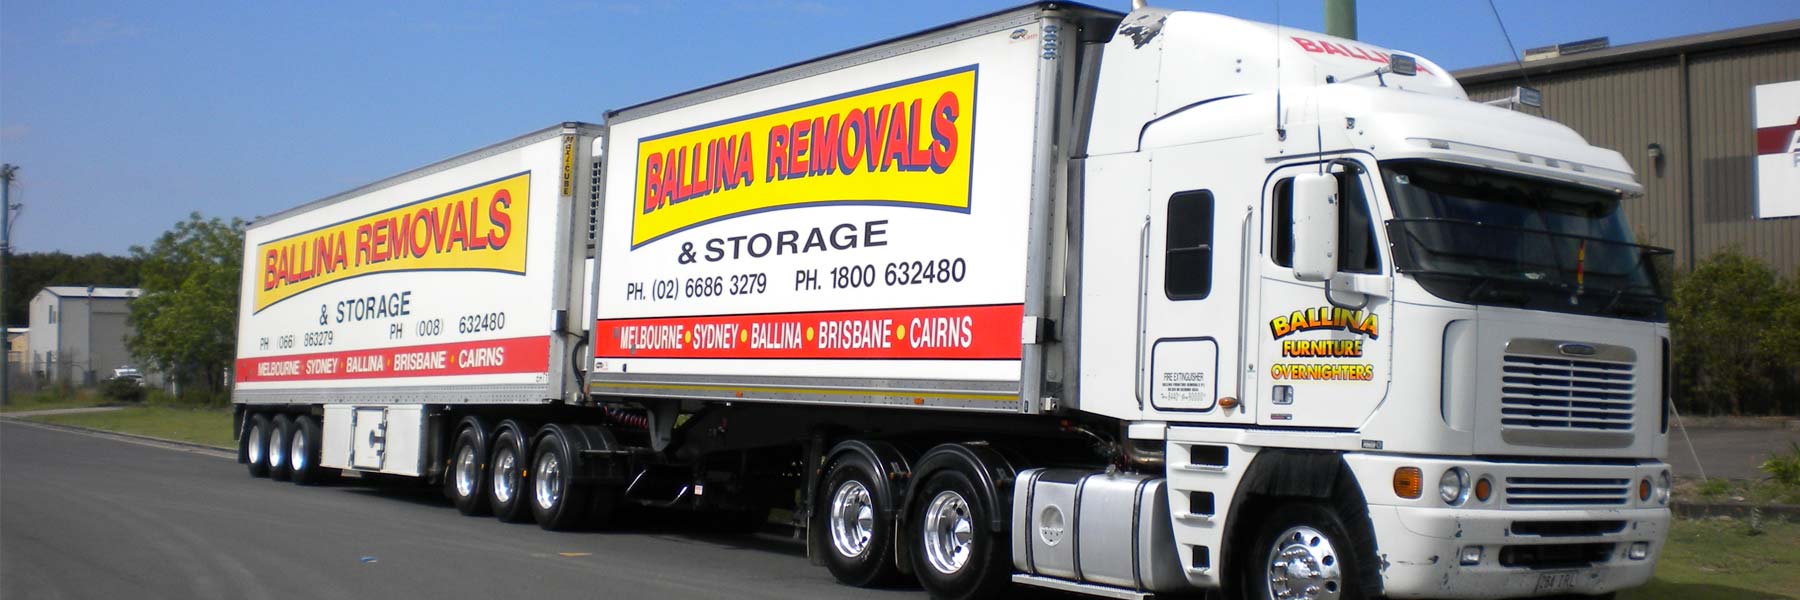 Ballina Removals & Storage